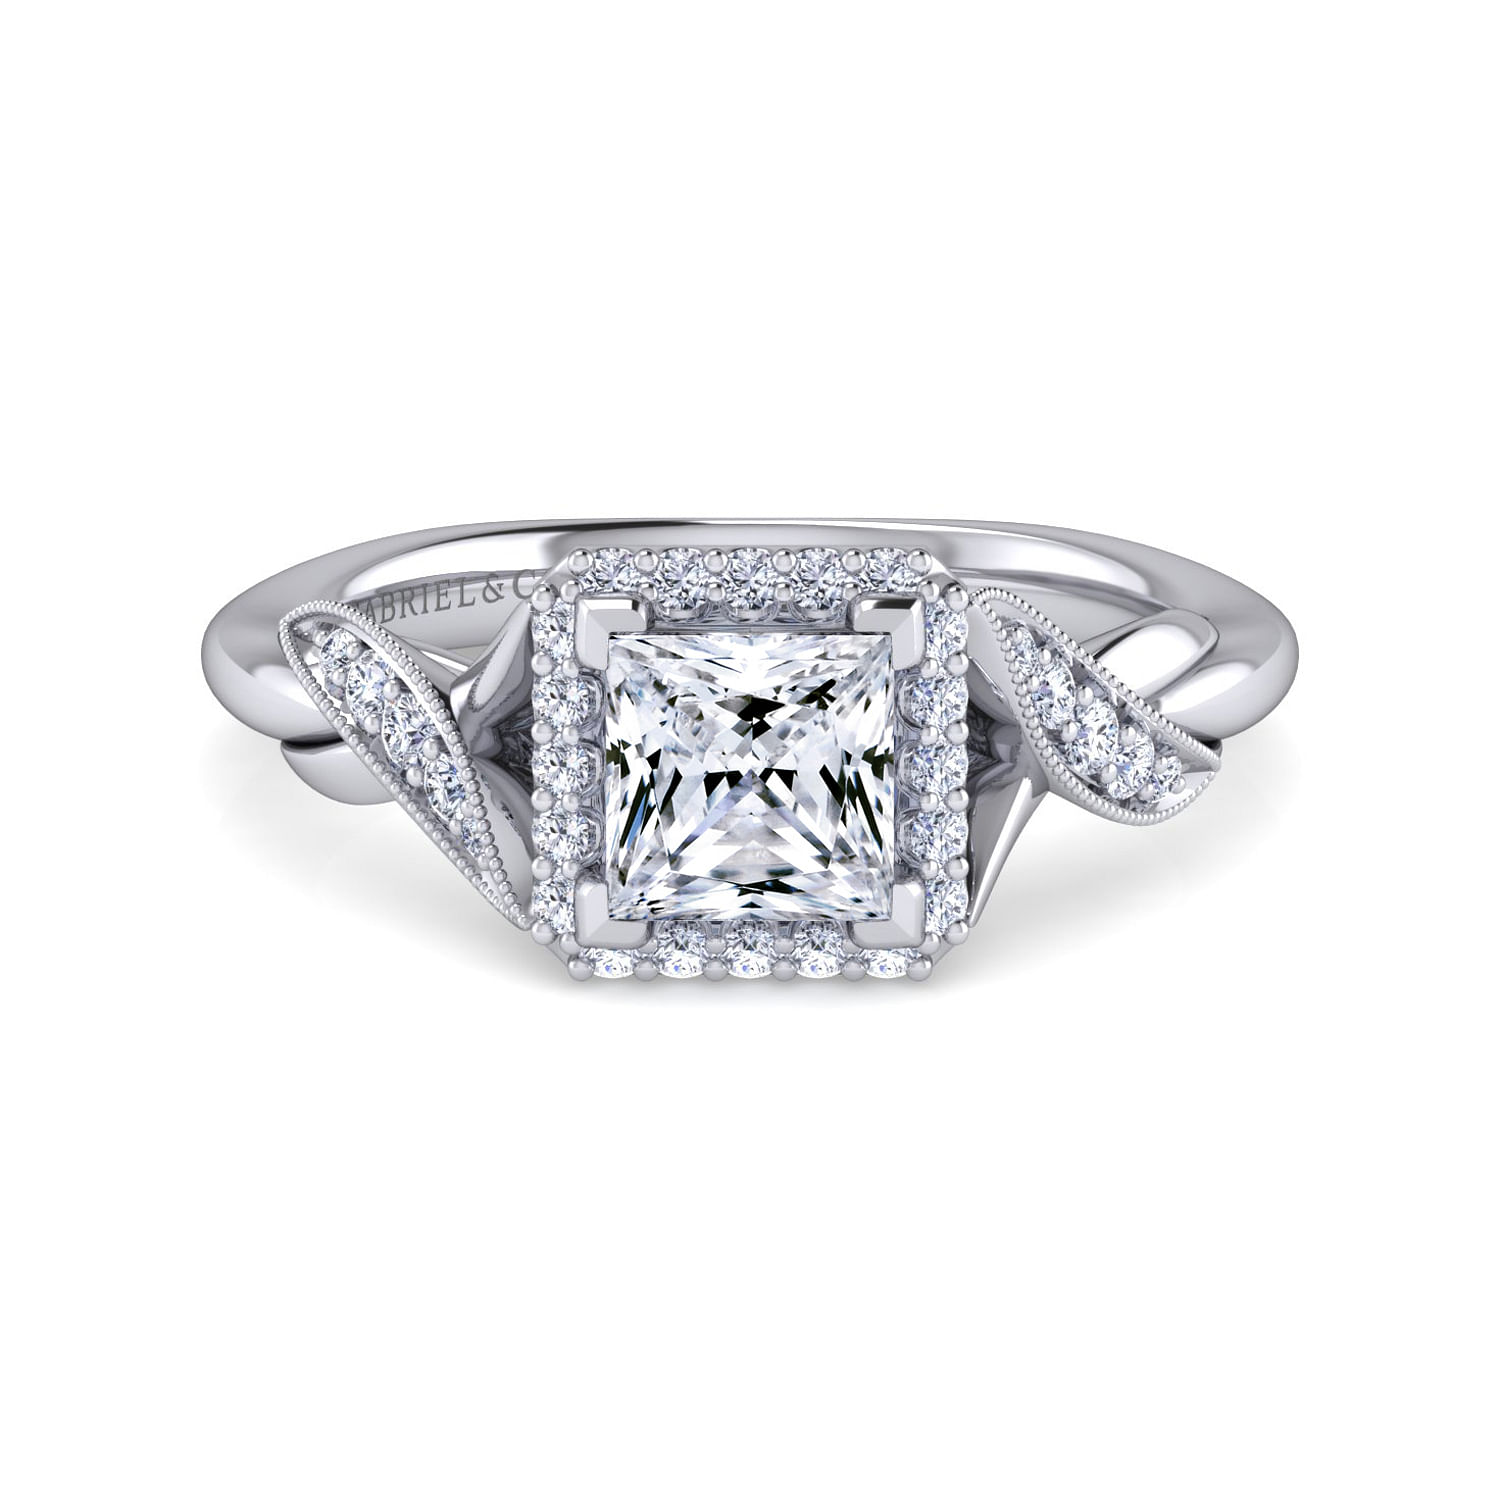 Shae - Vintage Inspired 14K White Gold Princess Halo Diamond Engagement Ring